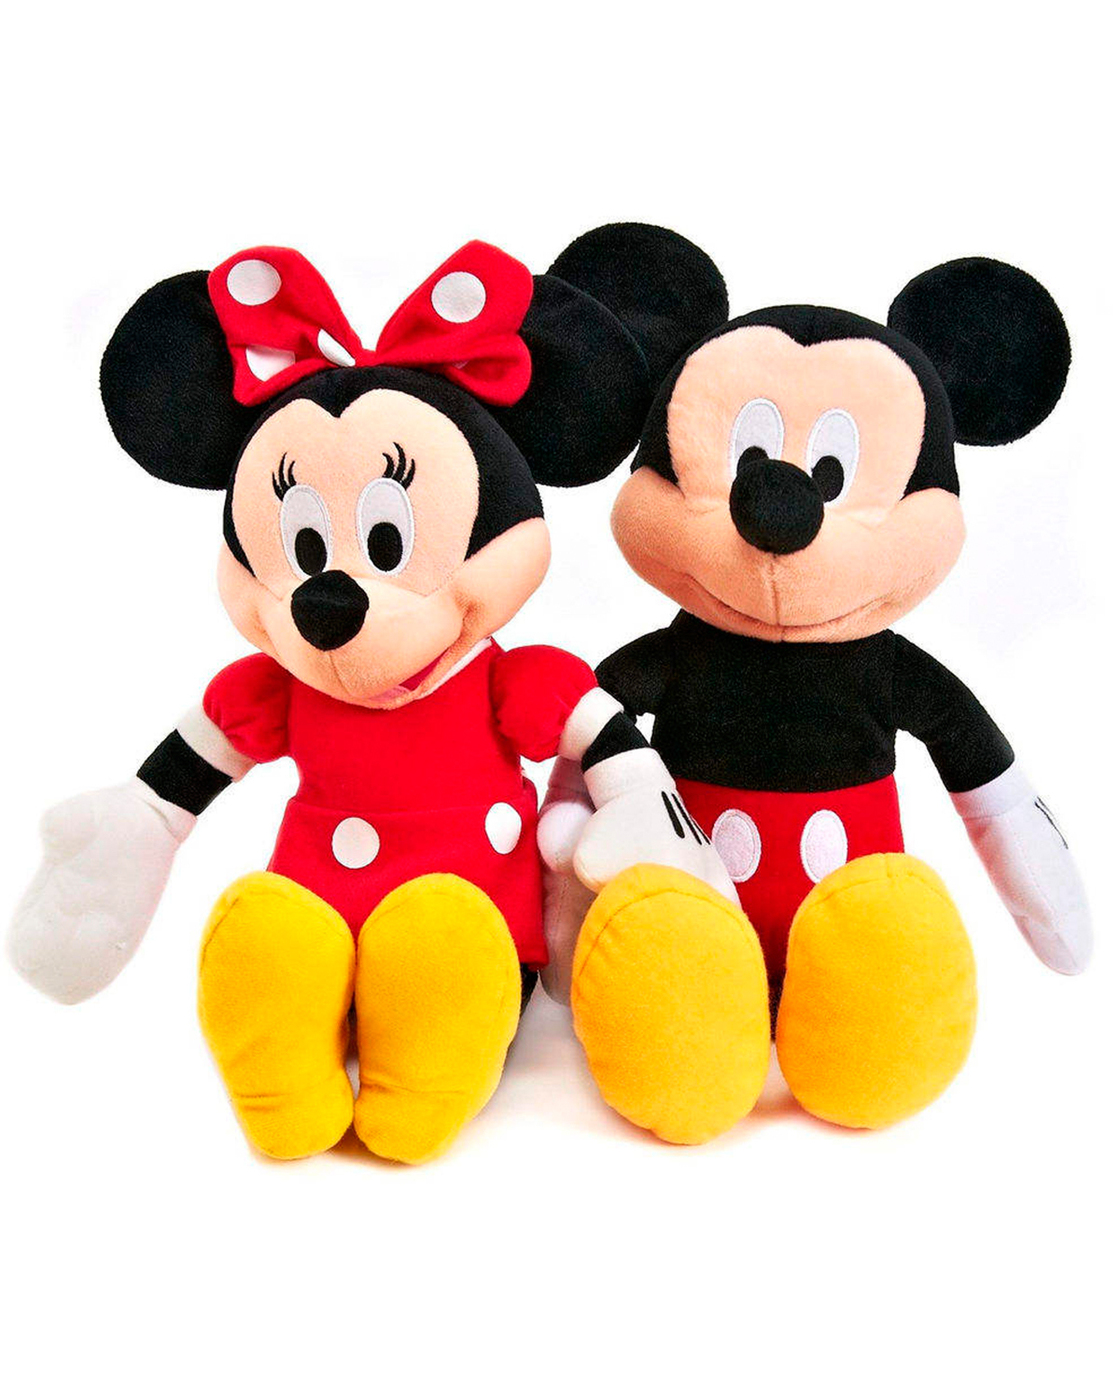 Мягкие игрушки Микки и Минни Маус Mickey Minnie Mouse, 2 шт. 35 см мягкая игрушка большой микки маус mickey mouse 120 см